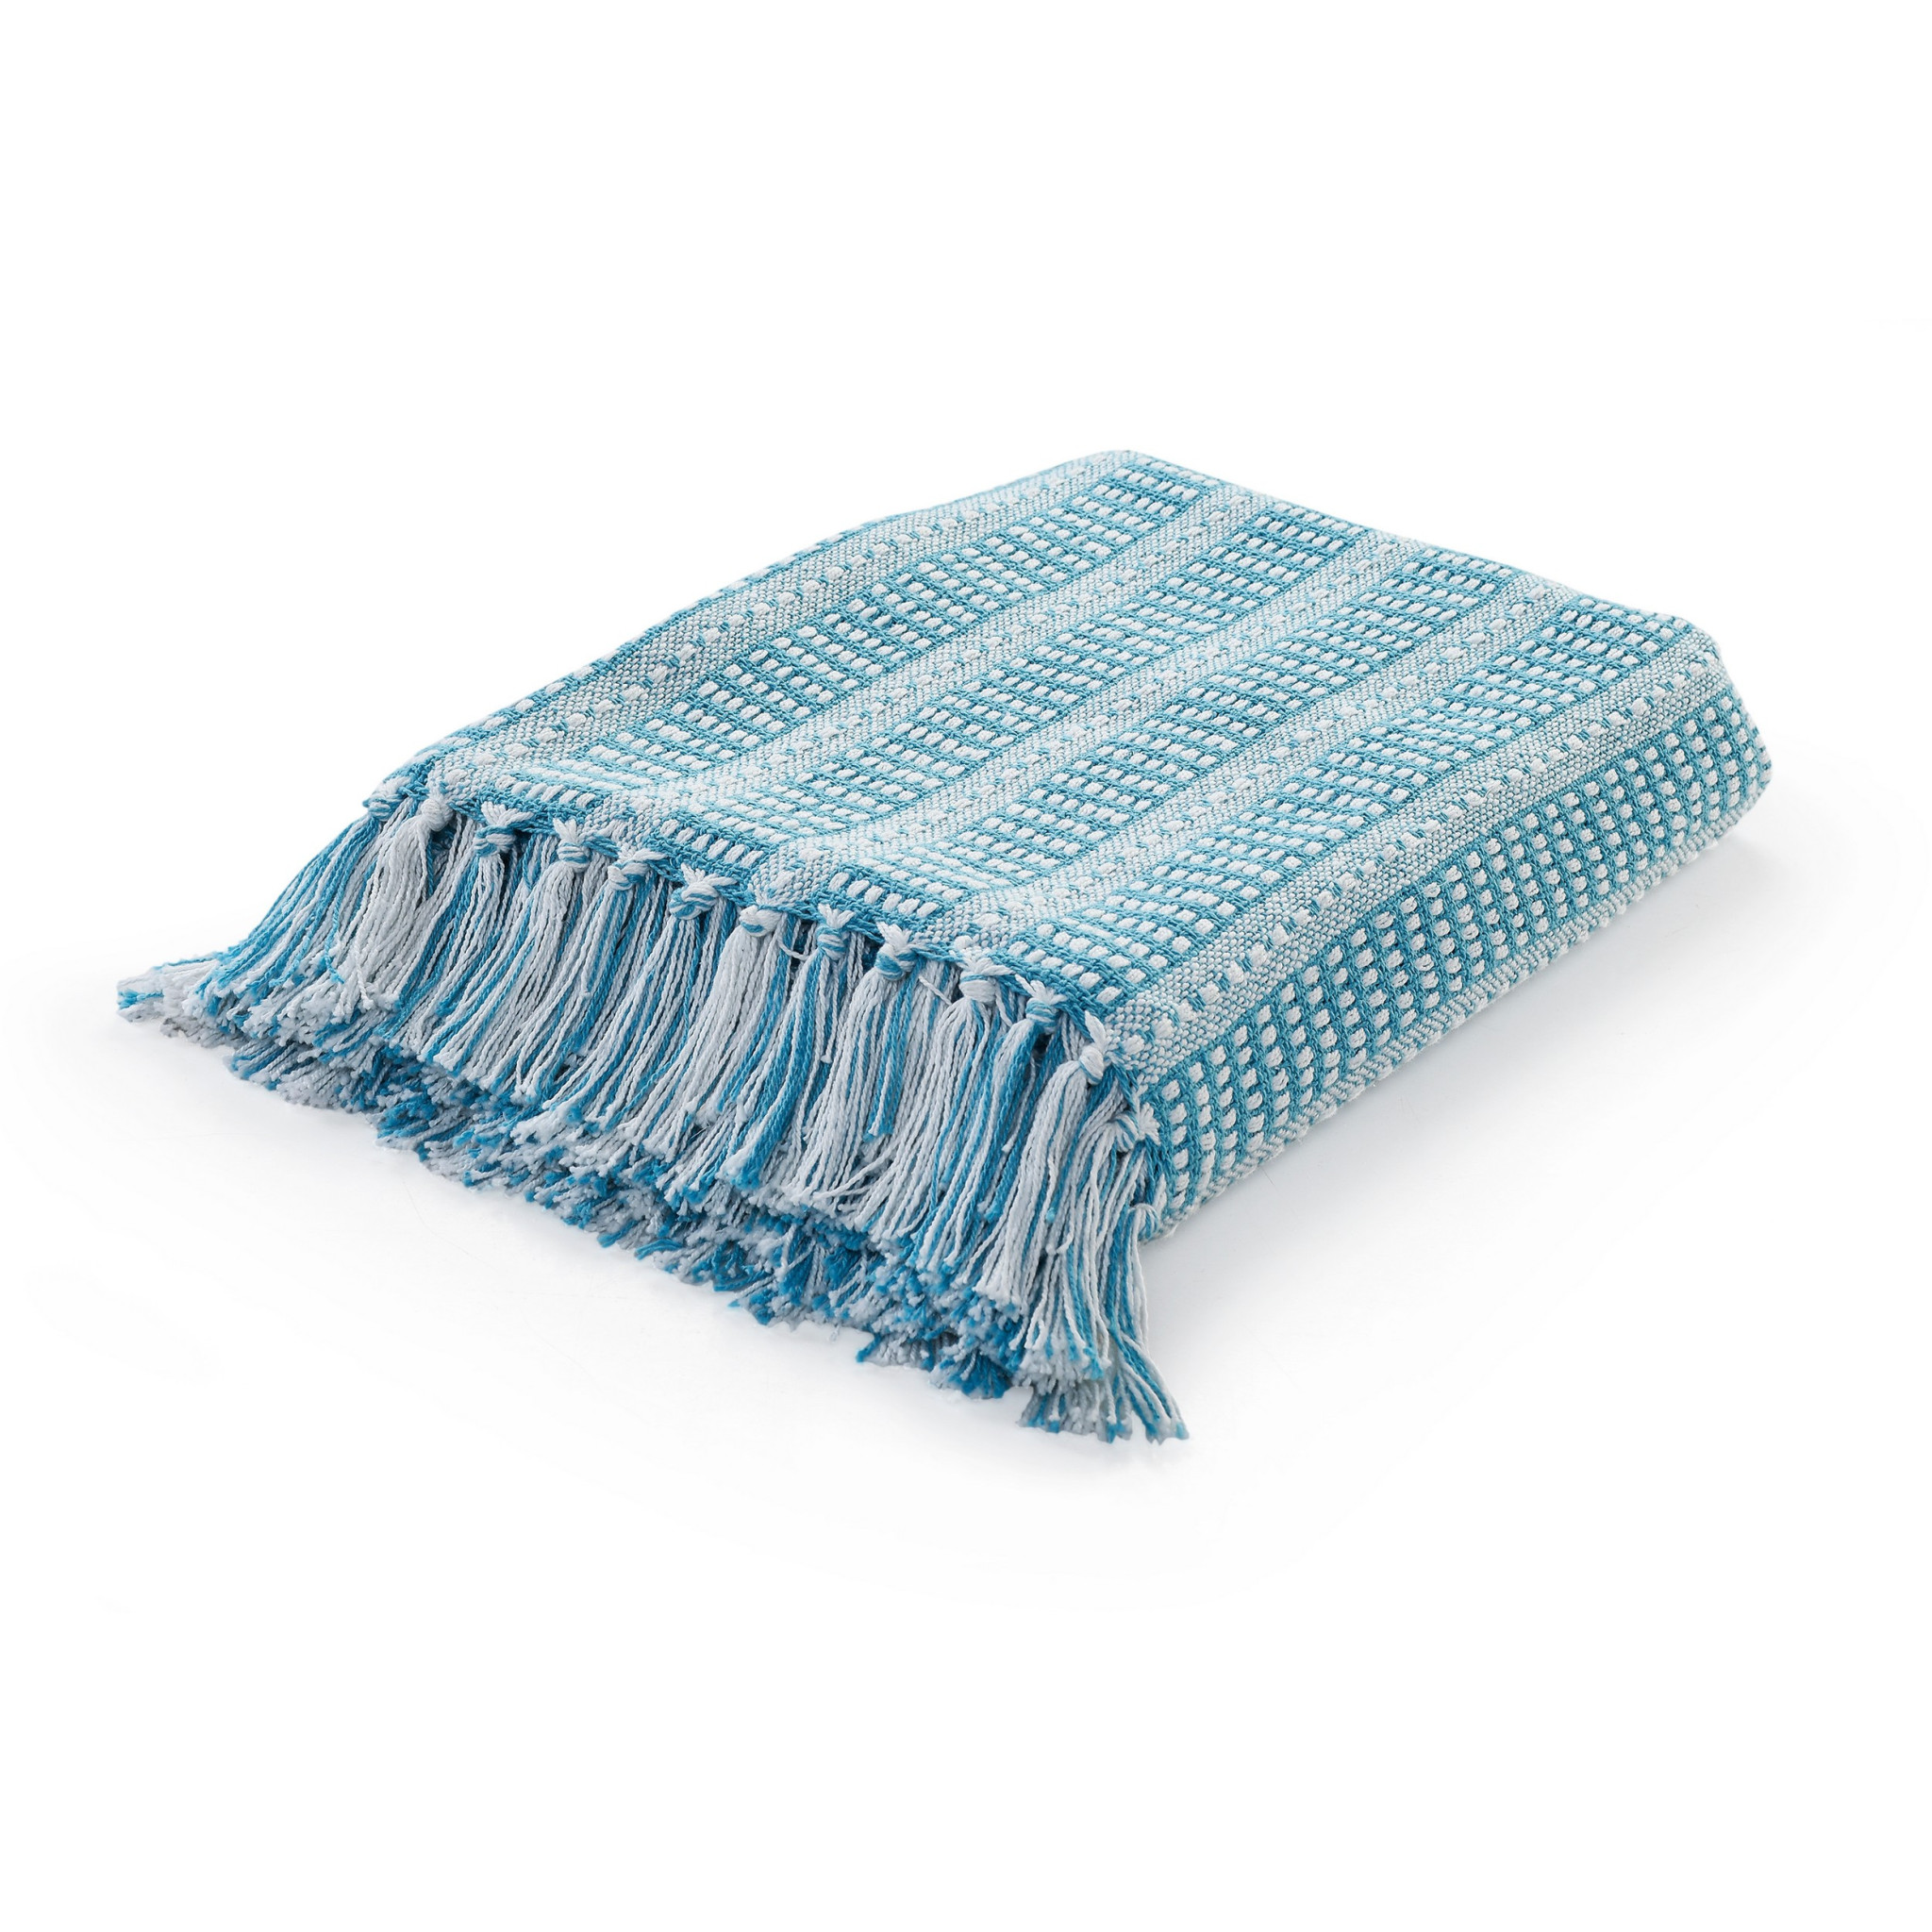 Blue and White Woven Cotton Striped Throw Blanket-516607-1